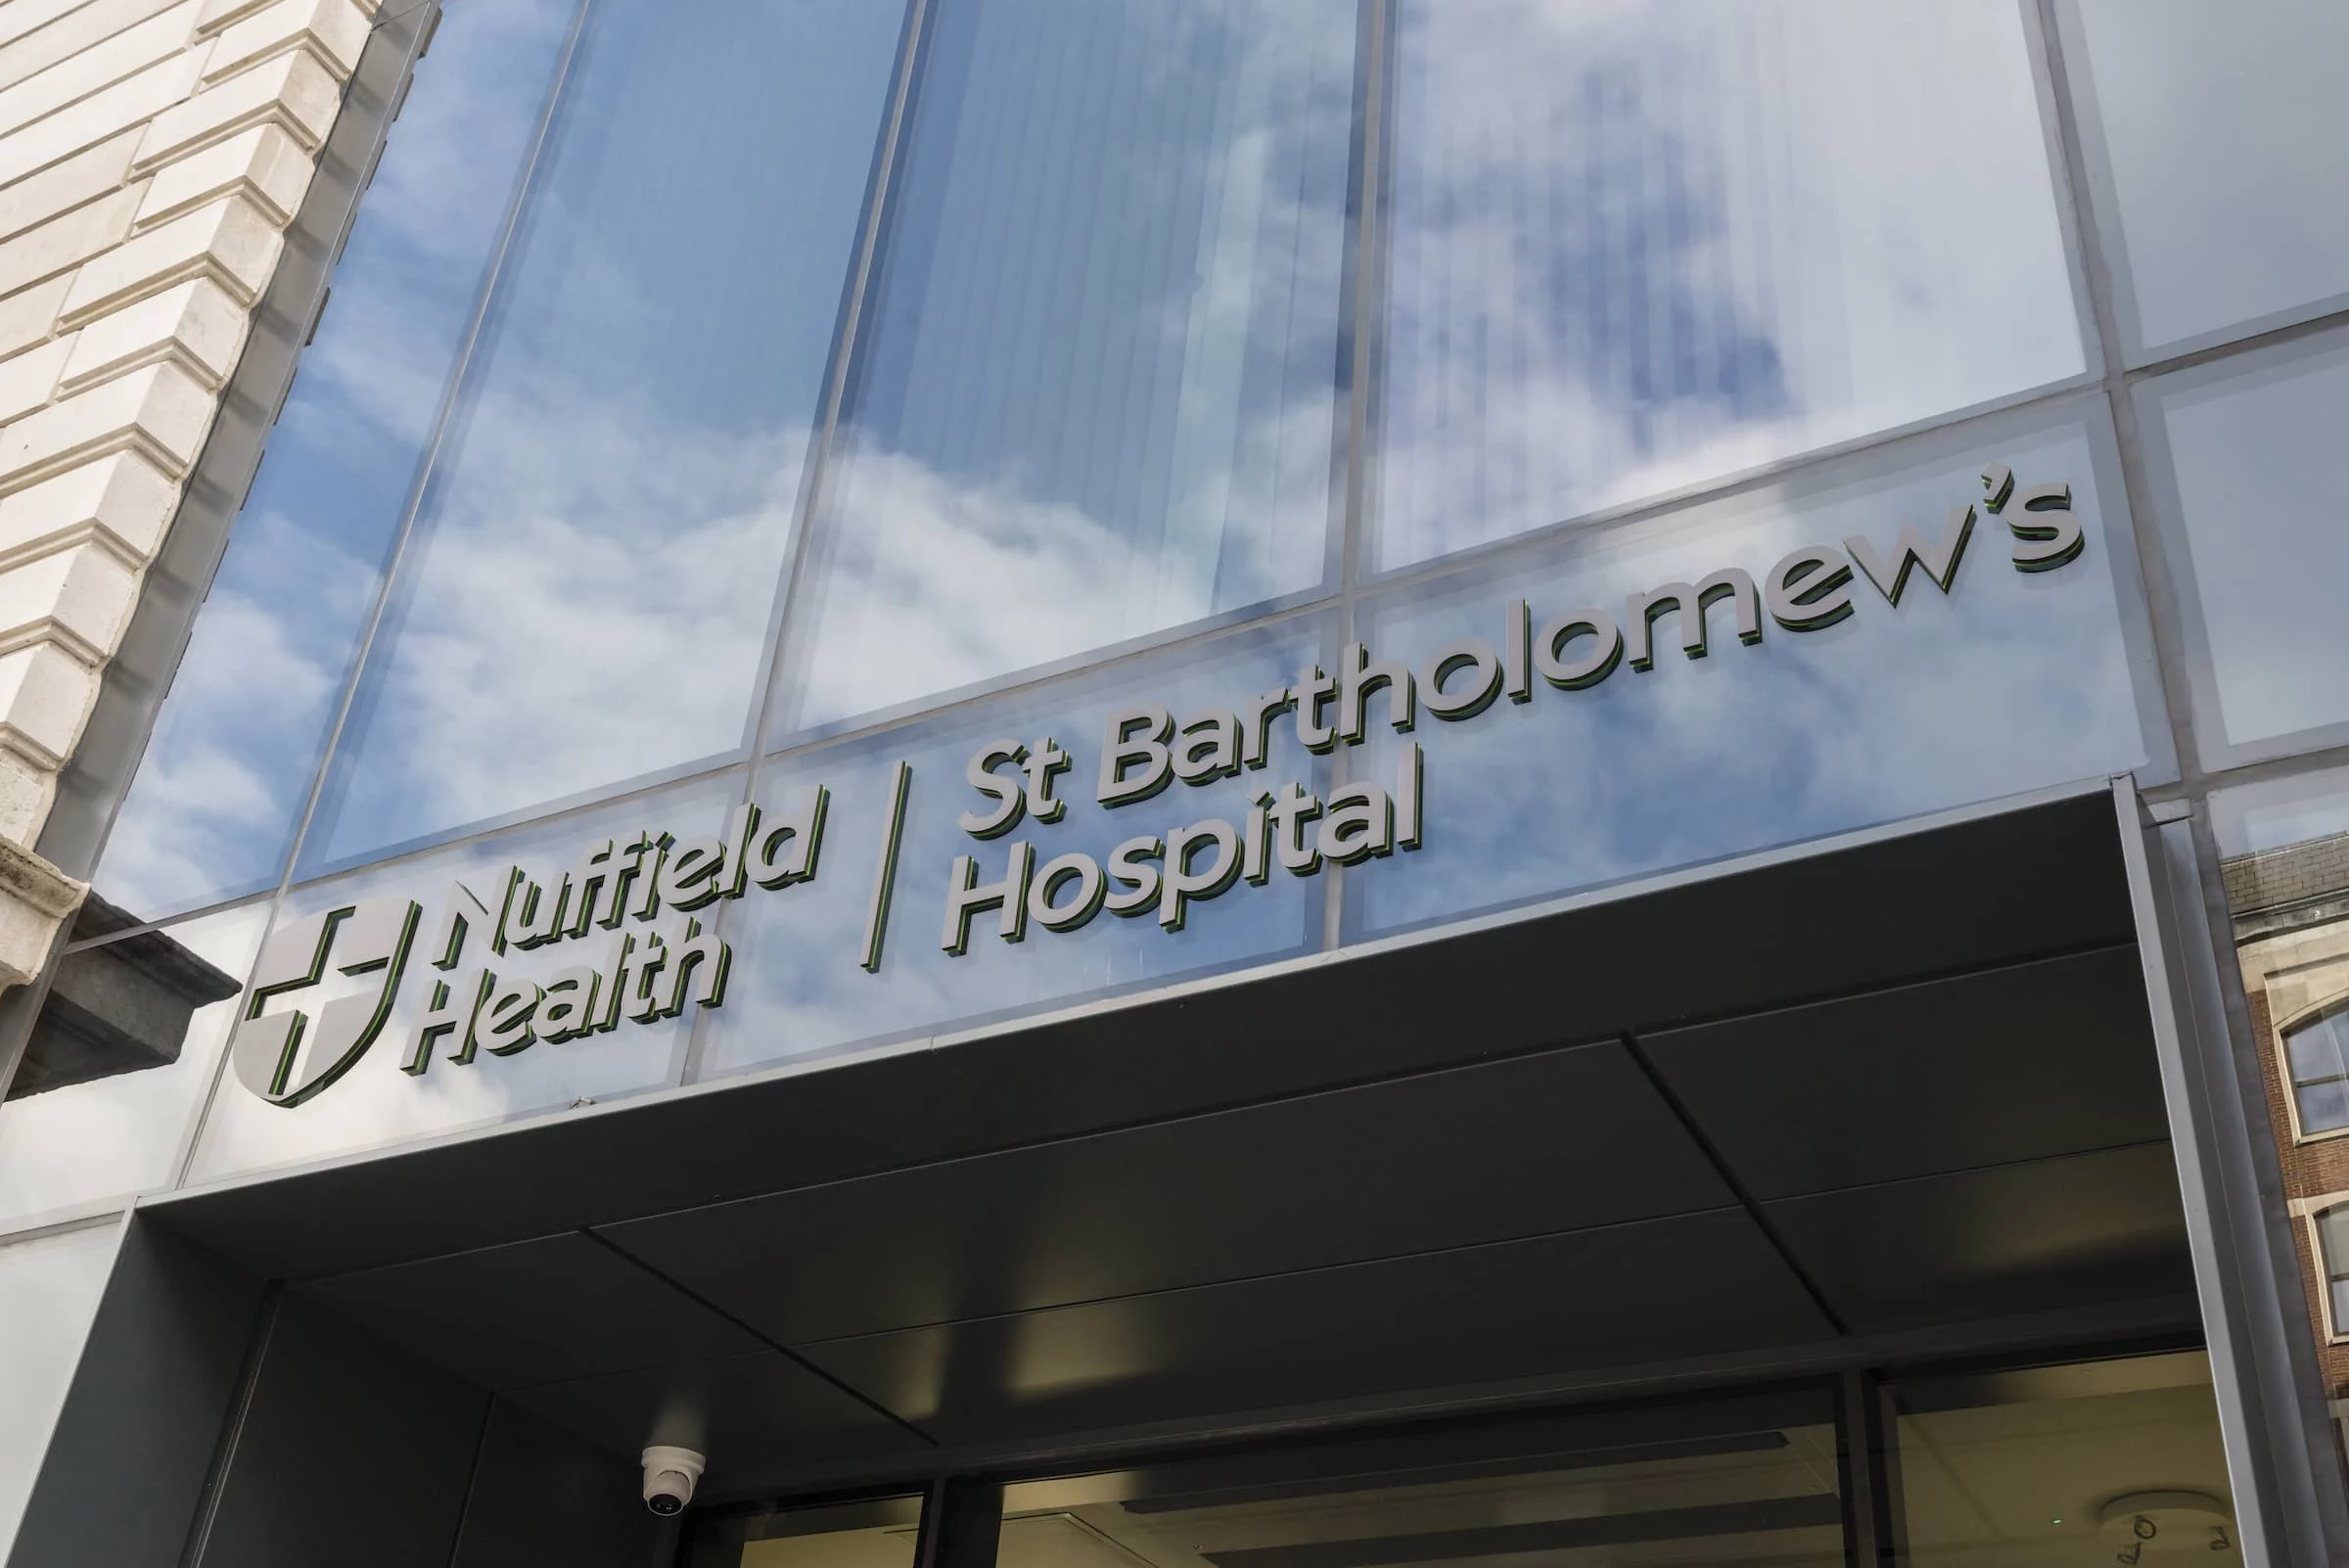 Hospital front nuffield health logo